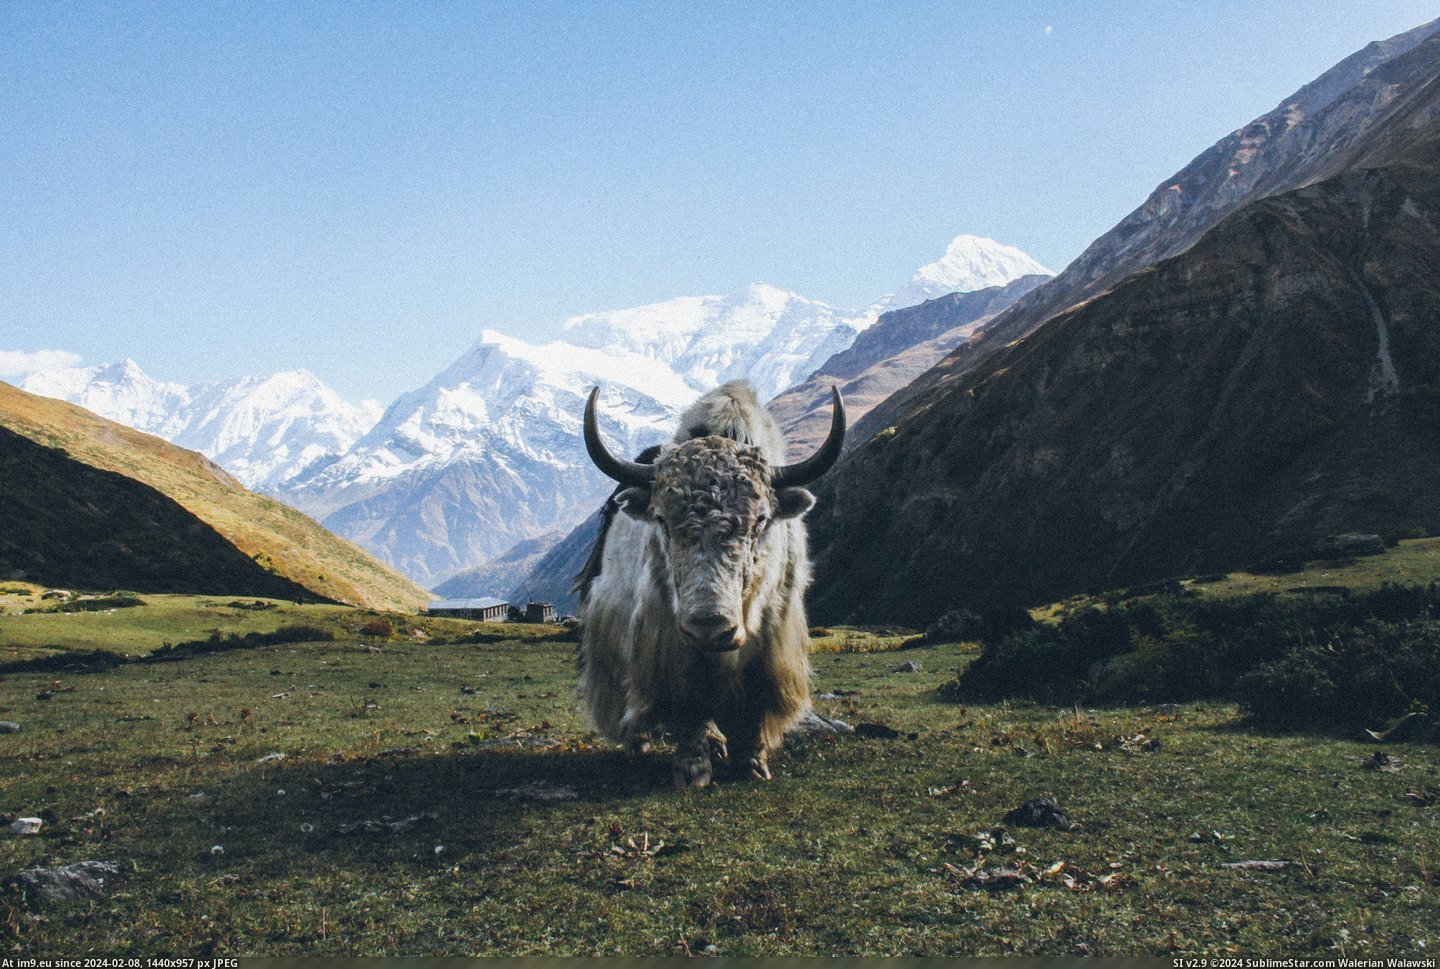  #Nepal  [Pics] A Yak in Nepal. Pic. (Obraz z album My r/PICS favs))